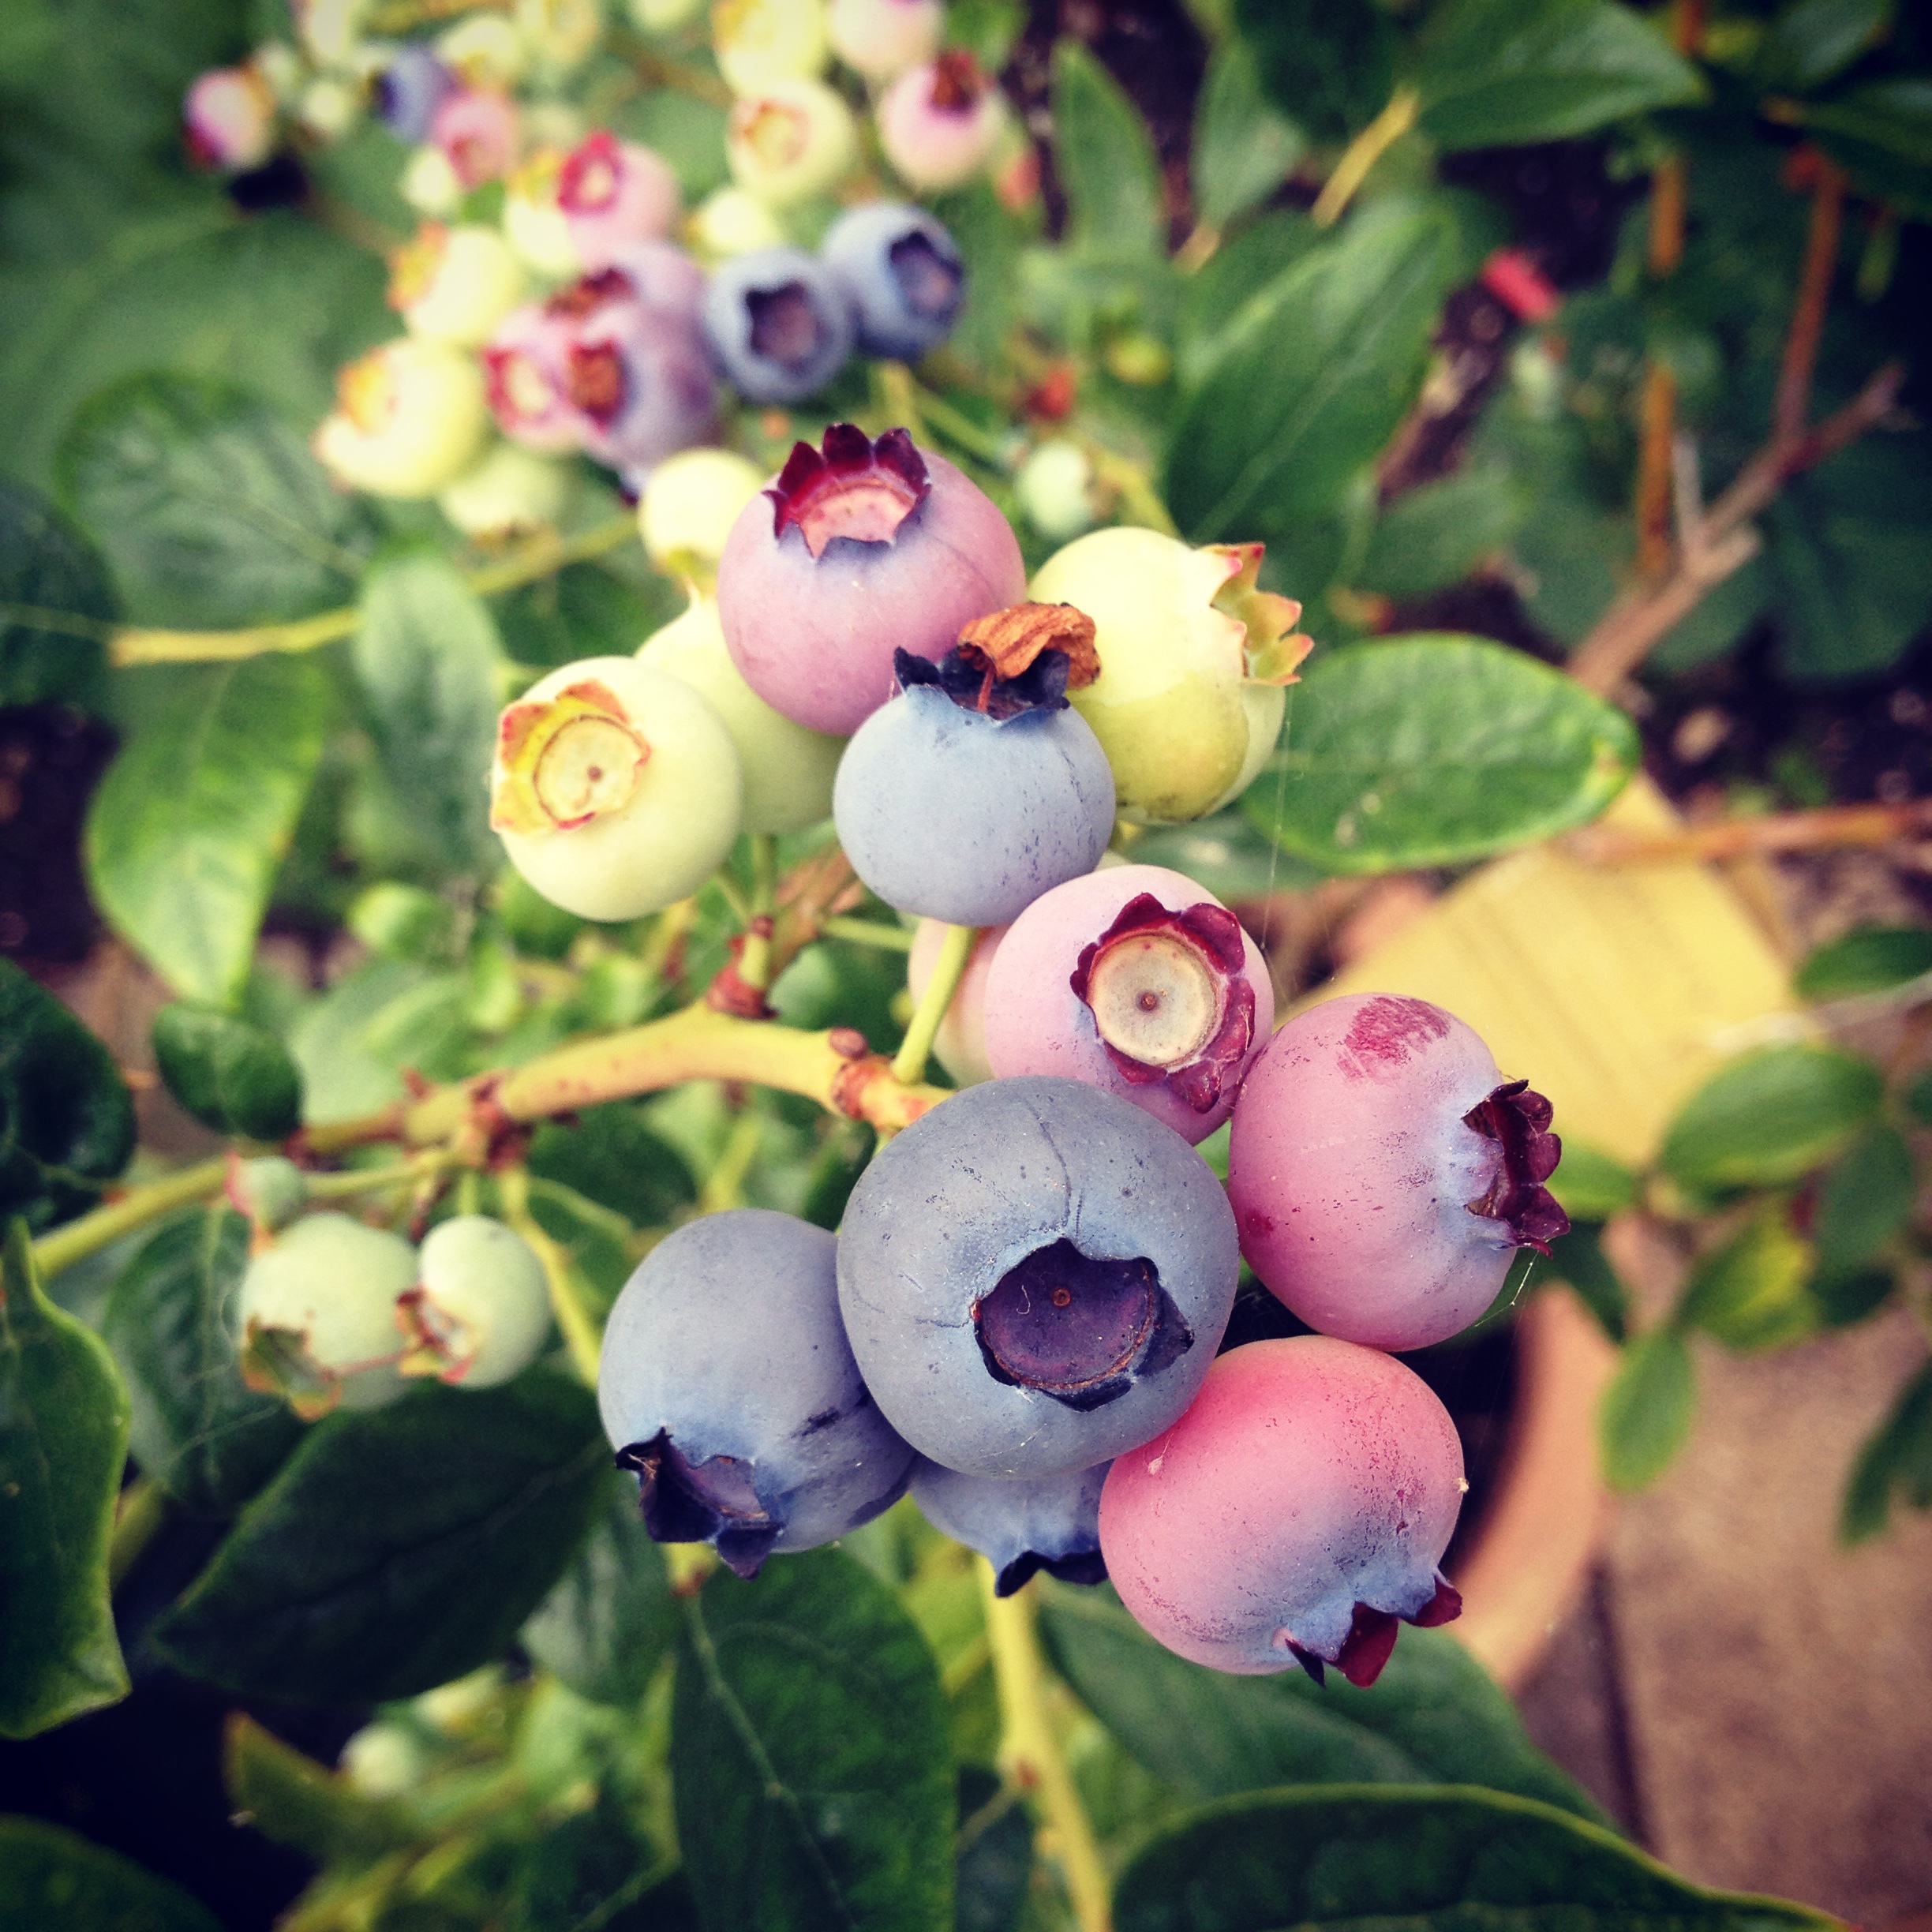 homegrown blueberries look beautiful!